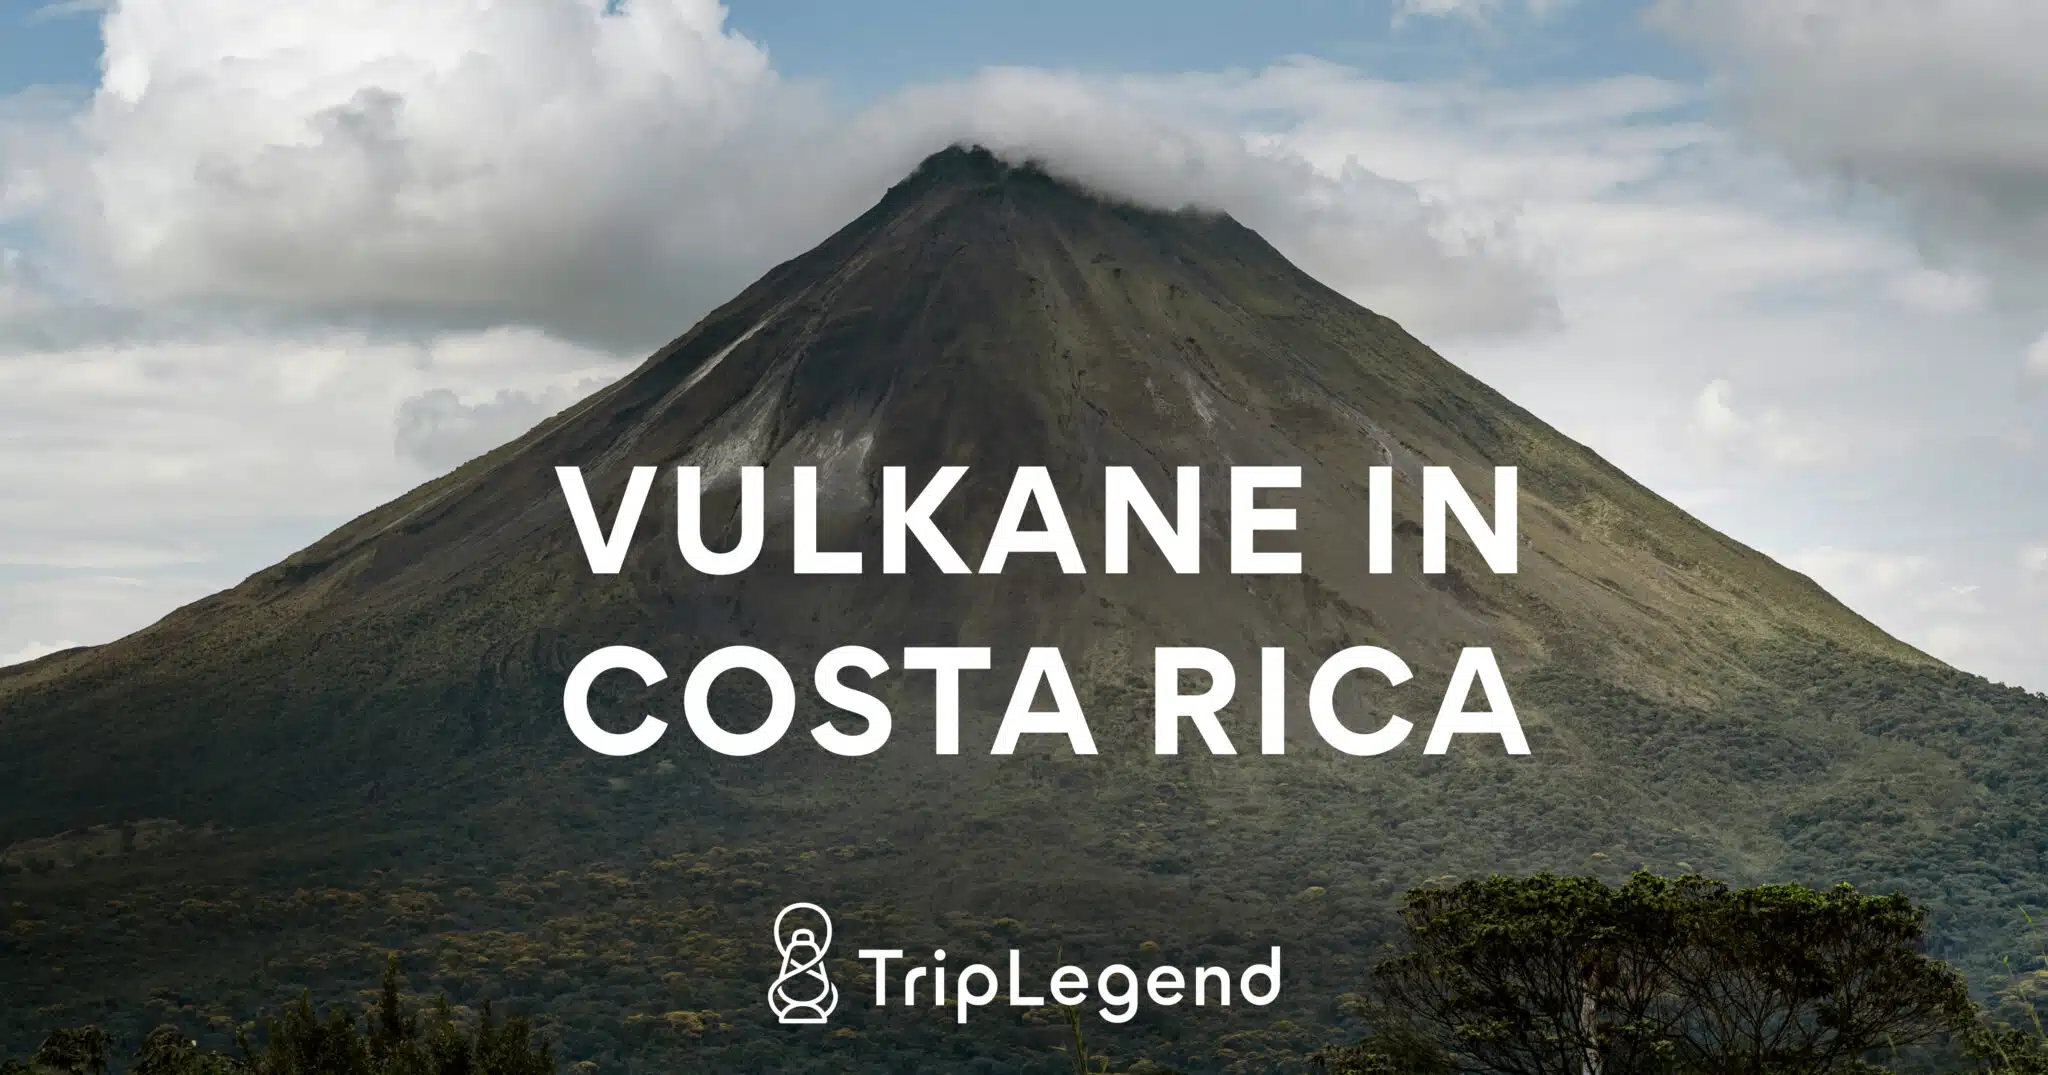 Vulkaner i Costa Rica skalenlig.jpg